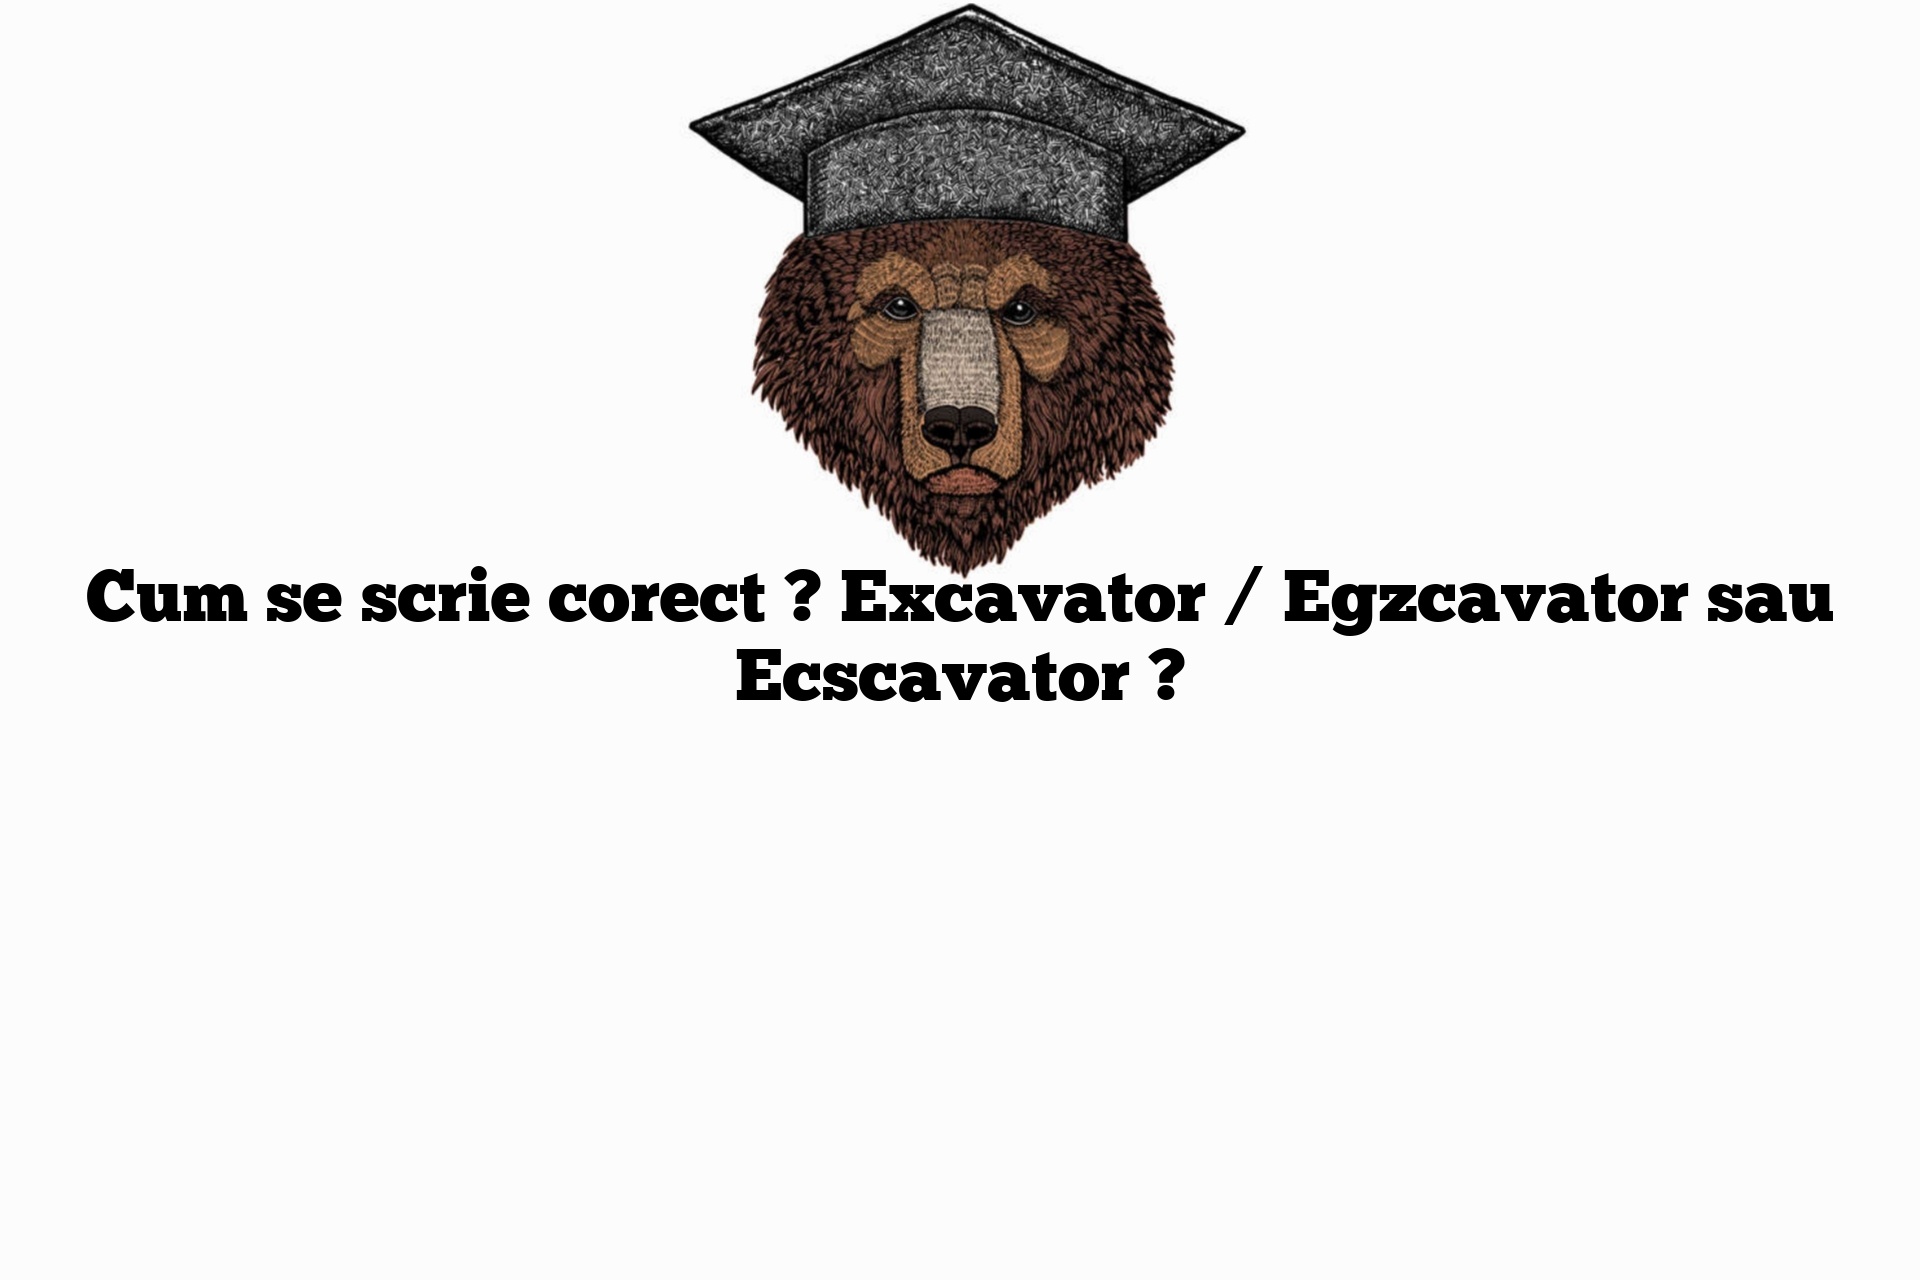 Cum se scrie corect ? Excavator / Egzcavator sau Ecscavator ?